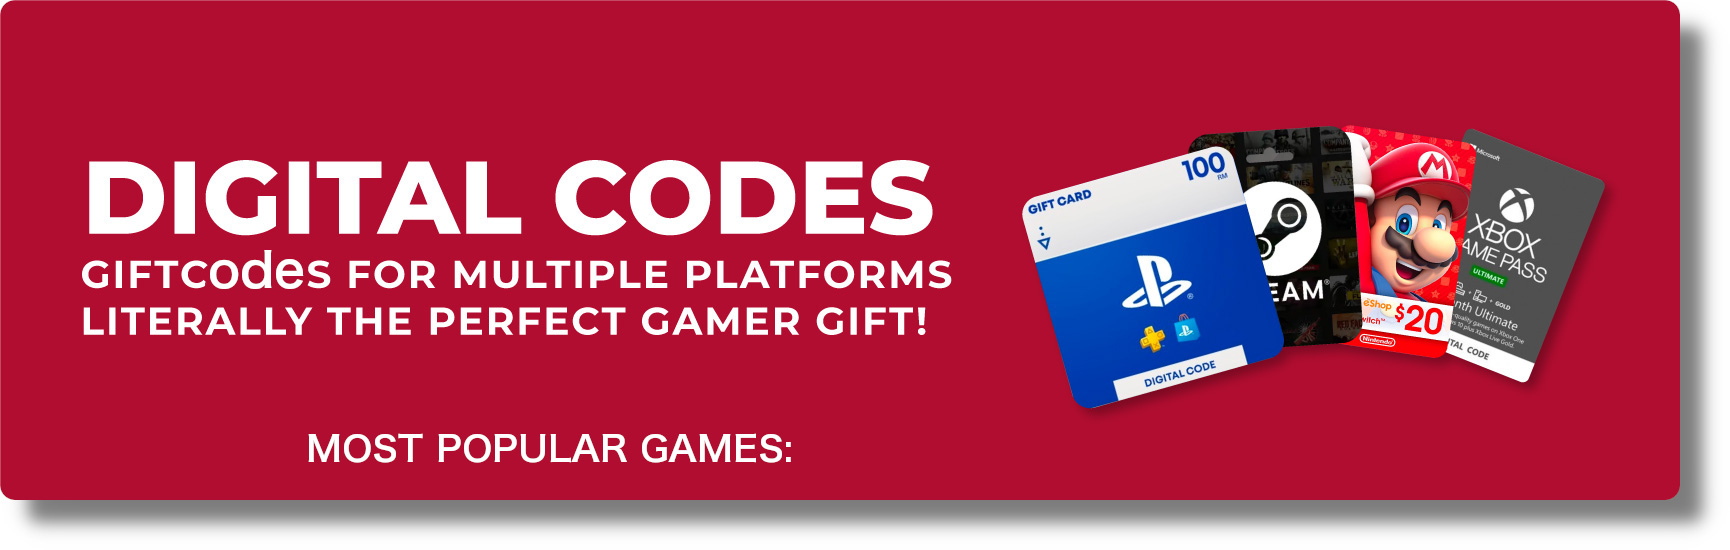 Digital gift codes for all platforms (google, apple, psp and etc)